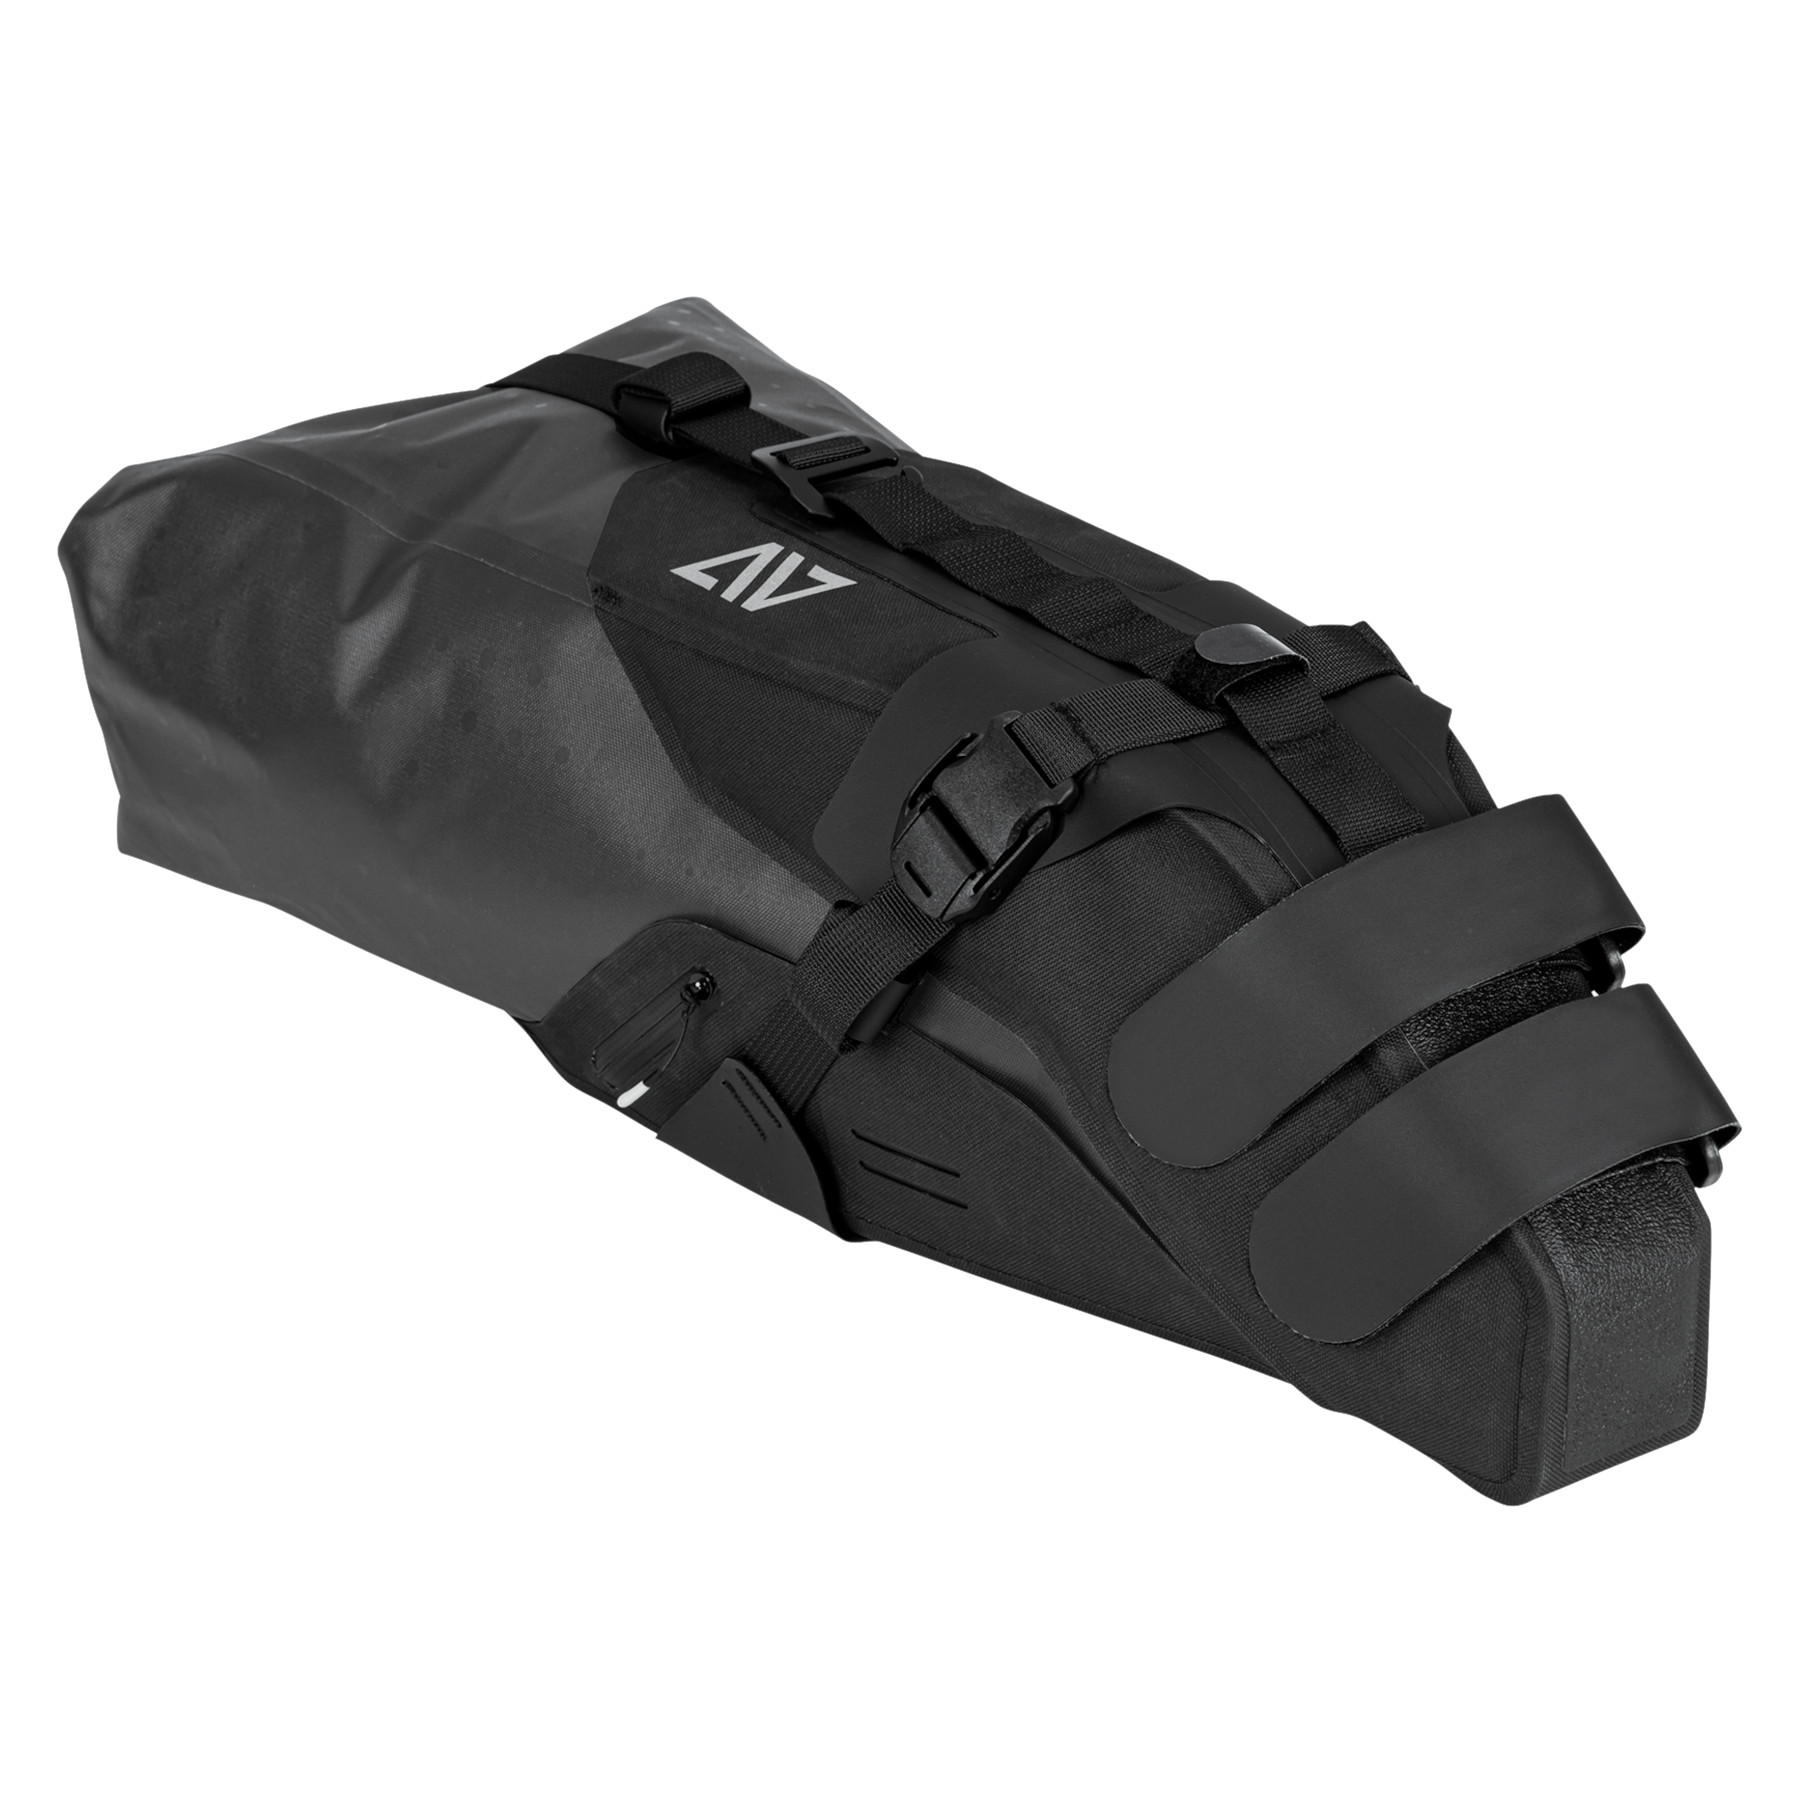 Productfoto van CUBE ACID PACK PRO 15 Saddle Bag - black